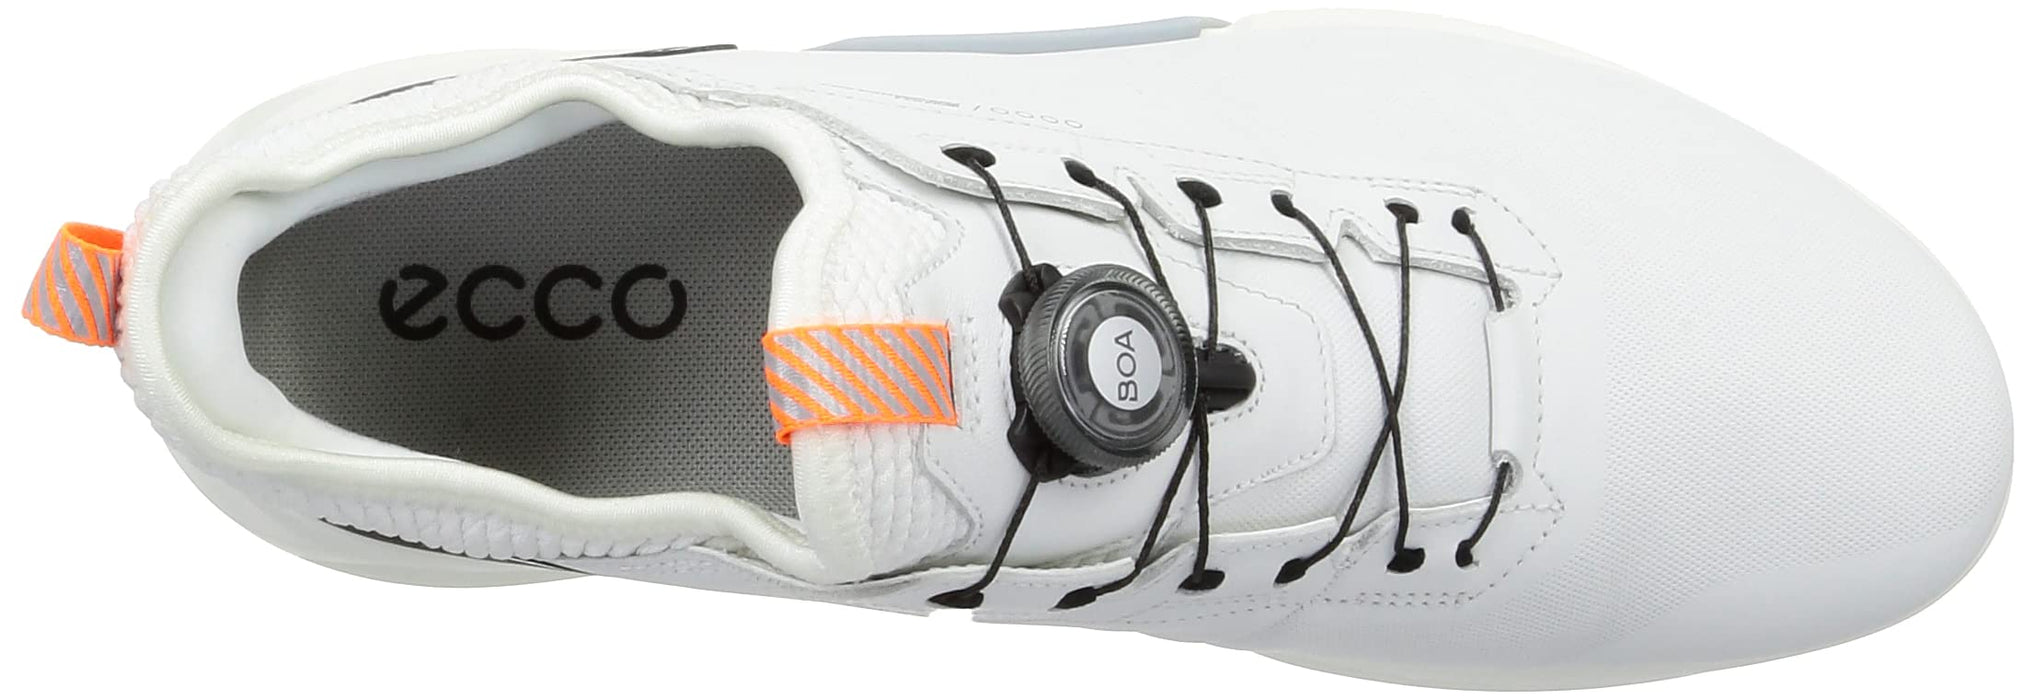 ECCO Men's Biom White Size 11-11.5 C4 Boa Gore-tex Waterproof Golf Shoes